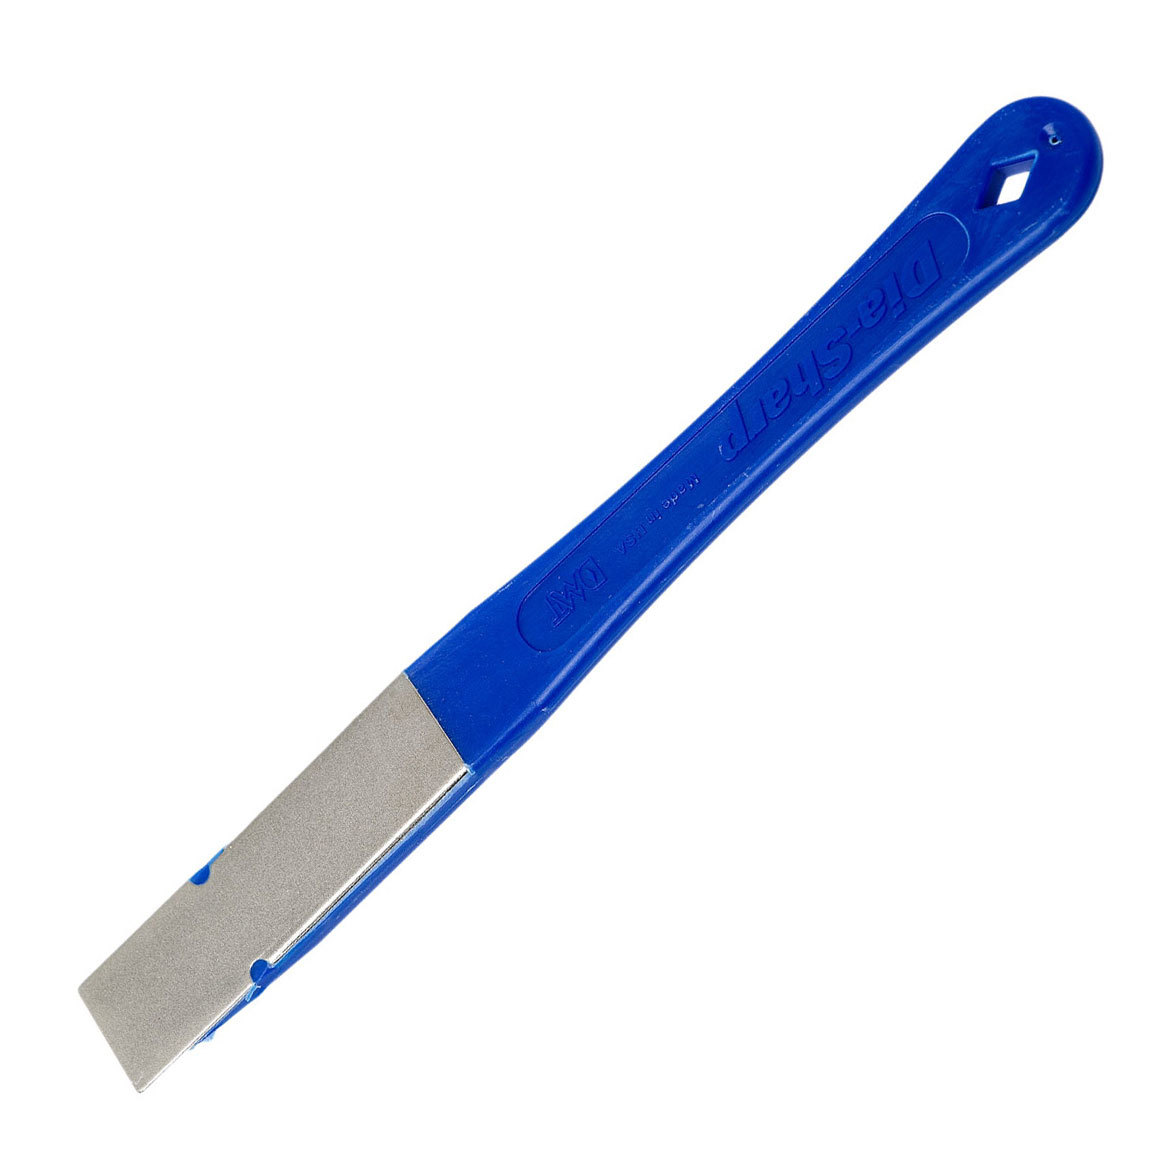 Алмазная точилка для ножей DMT® Coarse, 325 mesh, 45 micron электрическая алмазная точилка для ножей точилкин t 37